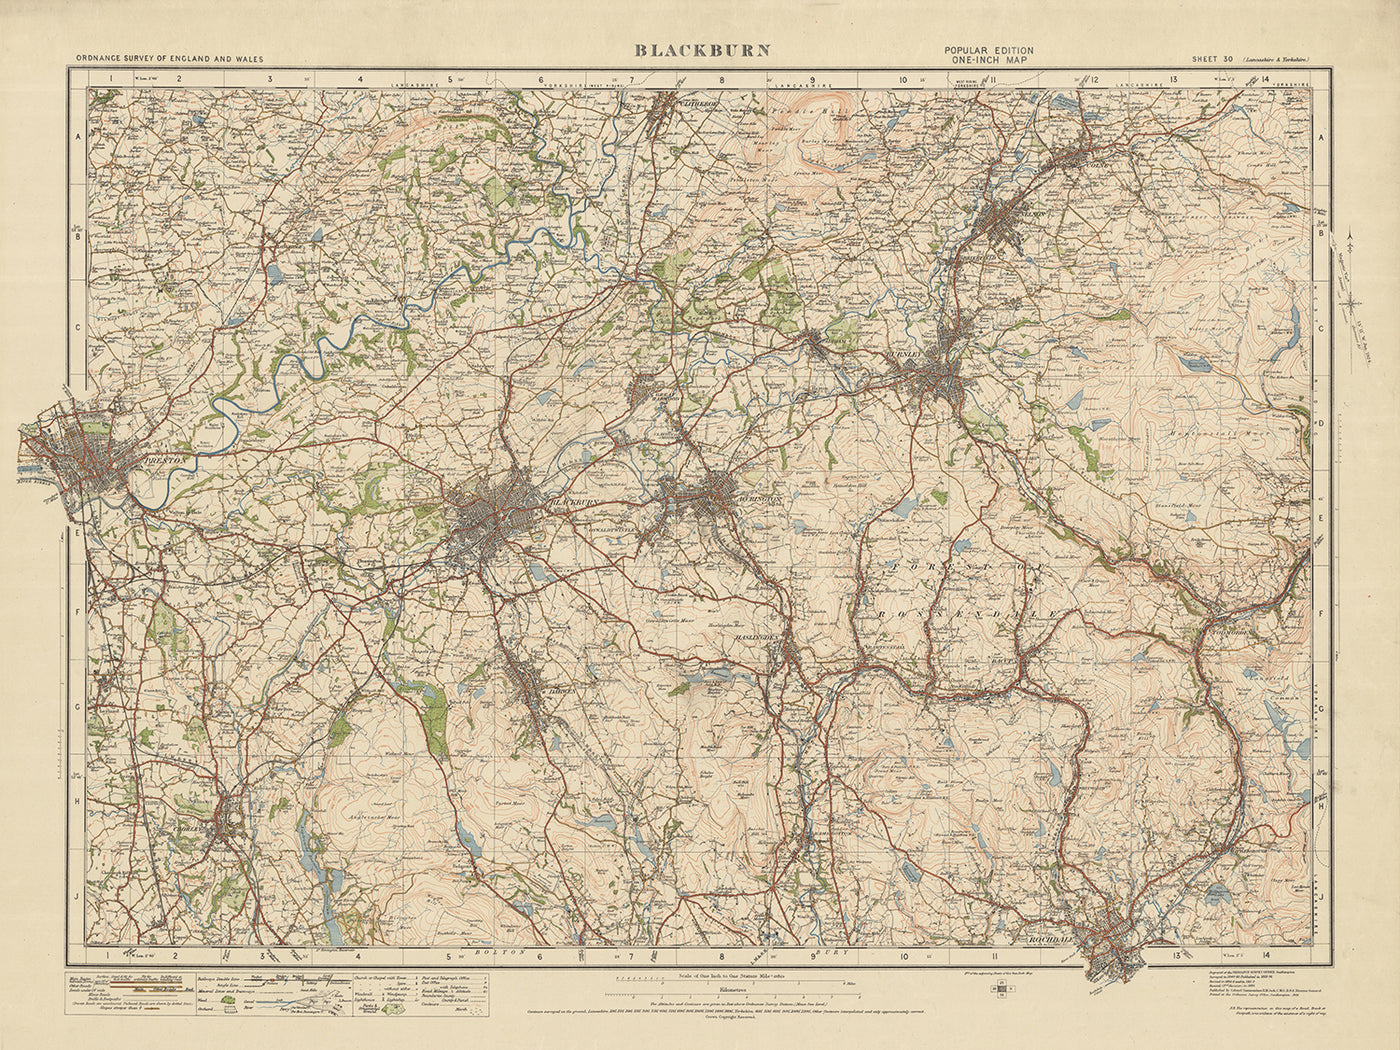 Alte Ordnance Survey Karte, Blatt 30 - Blackburn, 1925: Preston, Burnley, Clitheroe, Accrington, Chorley